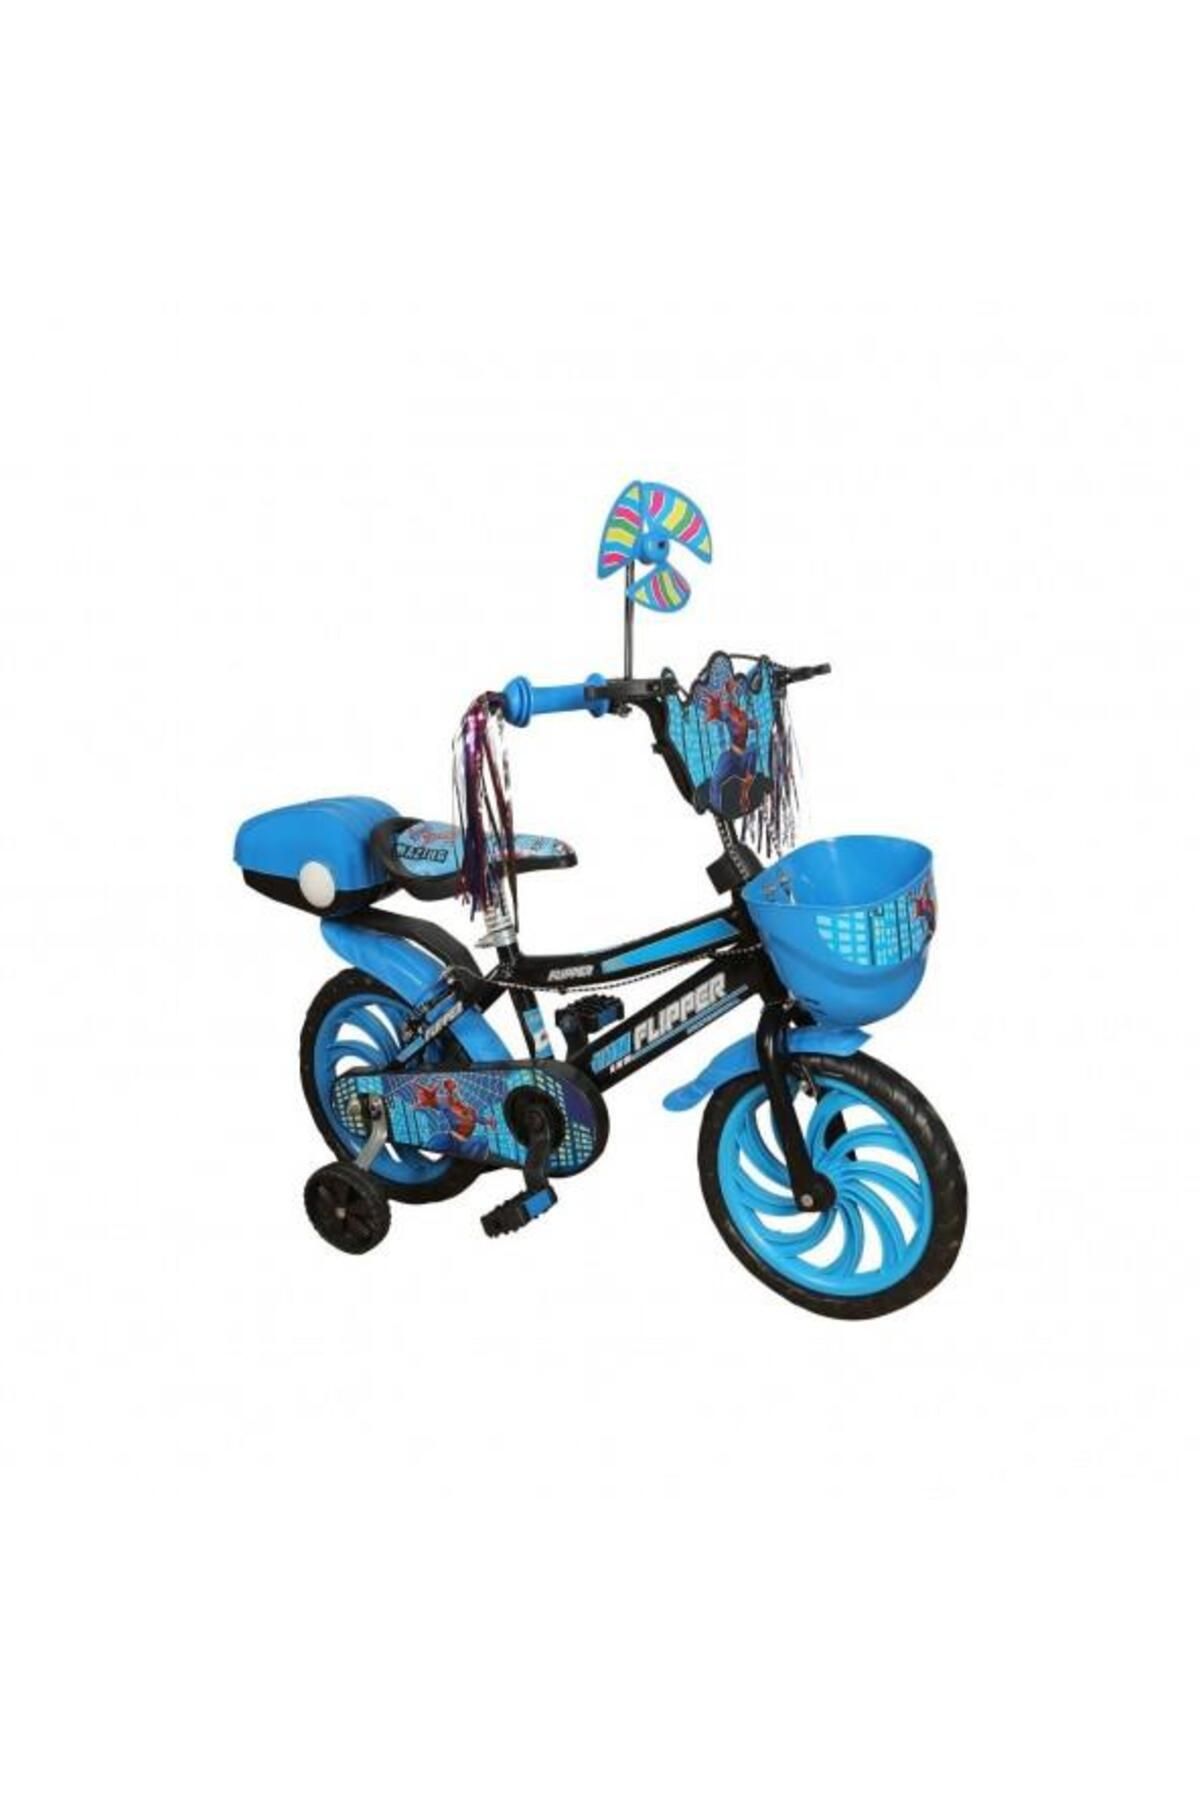 Tunca Flipper 15 Jant Lüx Çocuk Bisikleti Mavi 3-6 Yaş